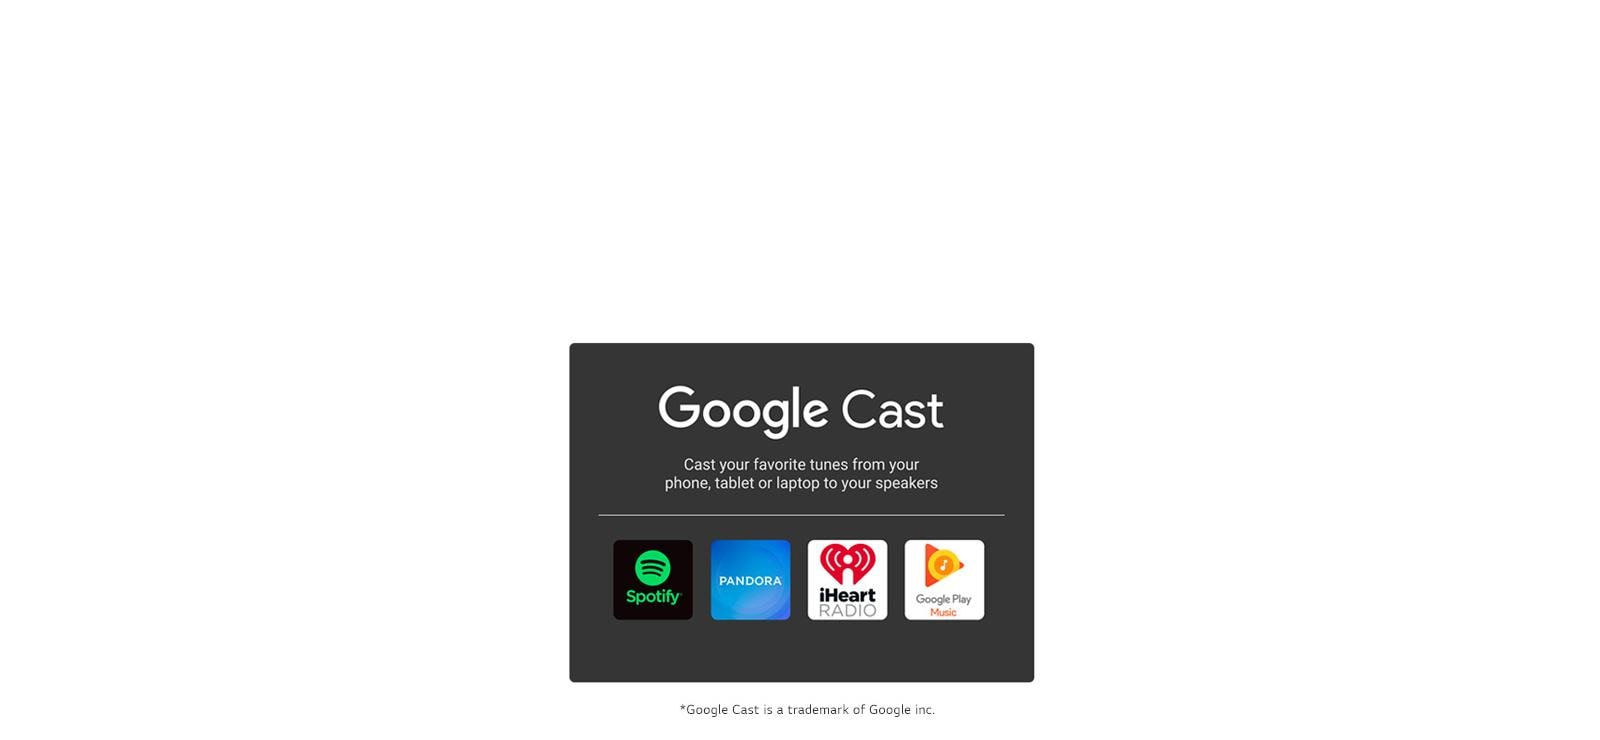 A Google Cast ™